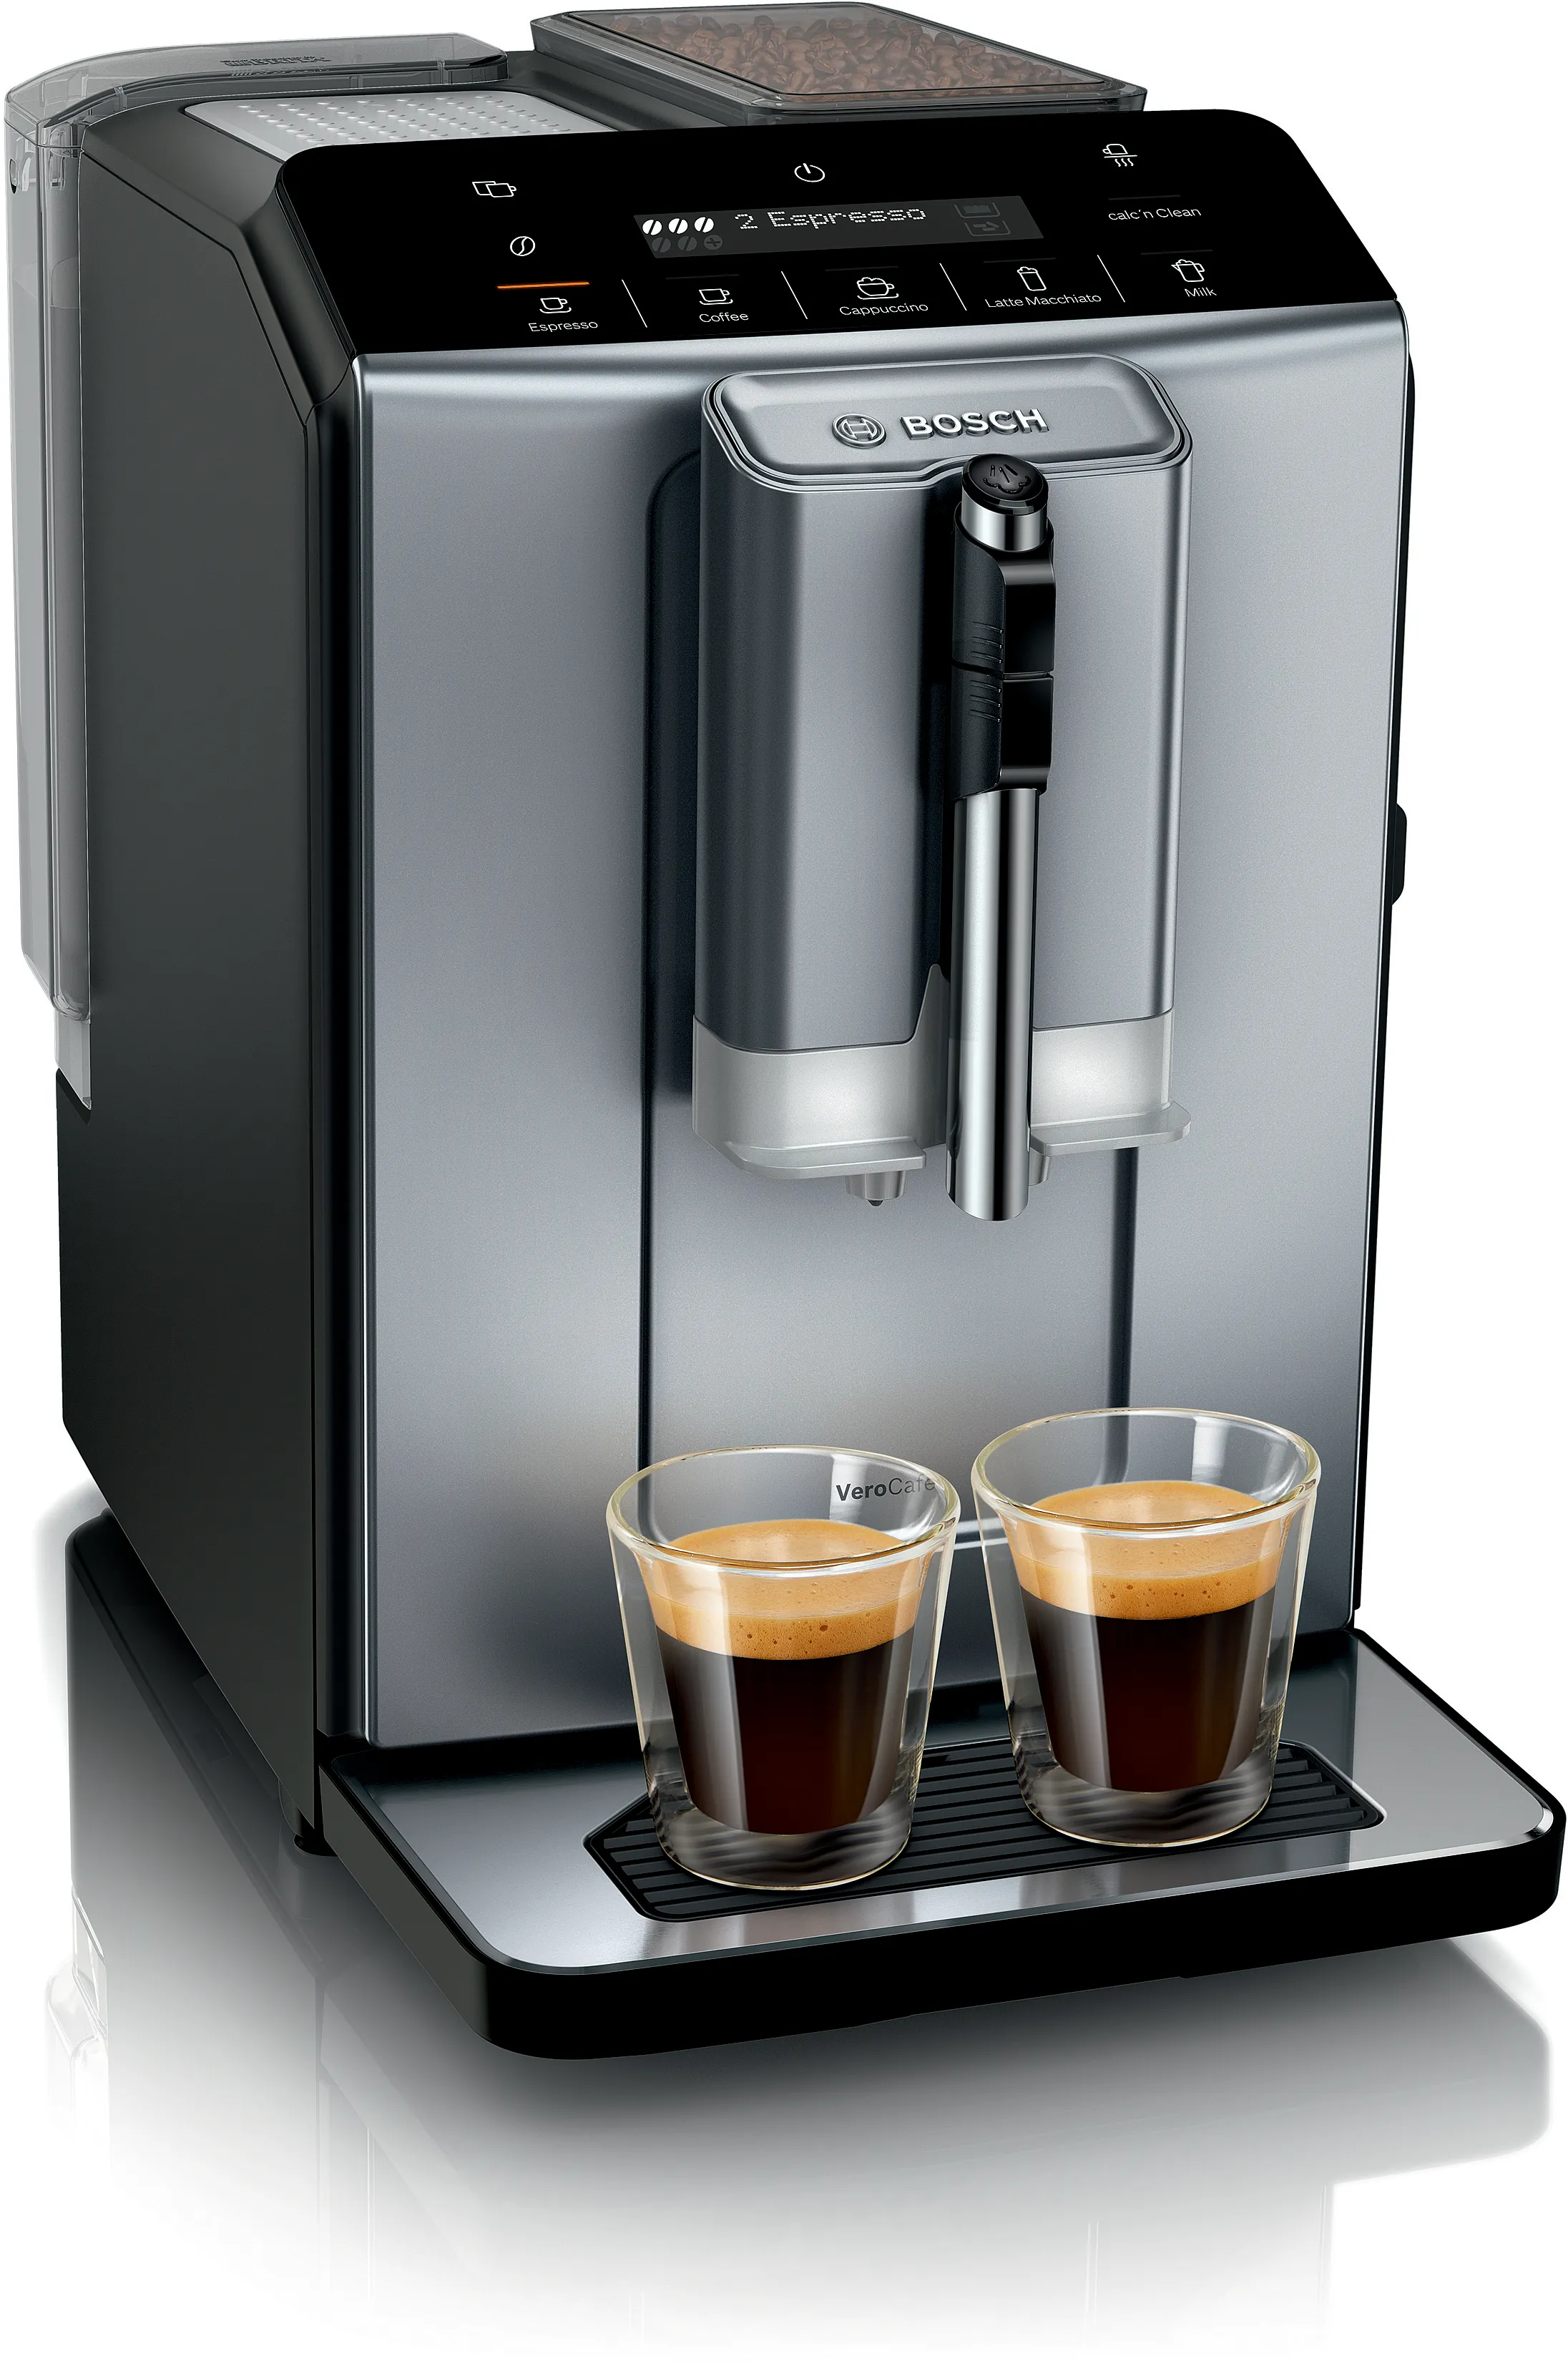 Series 2 Fully automatic coffee machine VeroCafe Diamond titanium metallic 